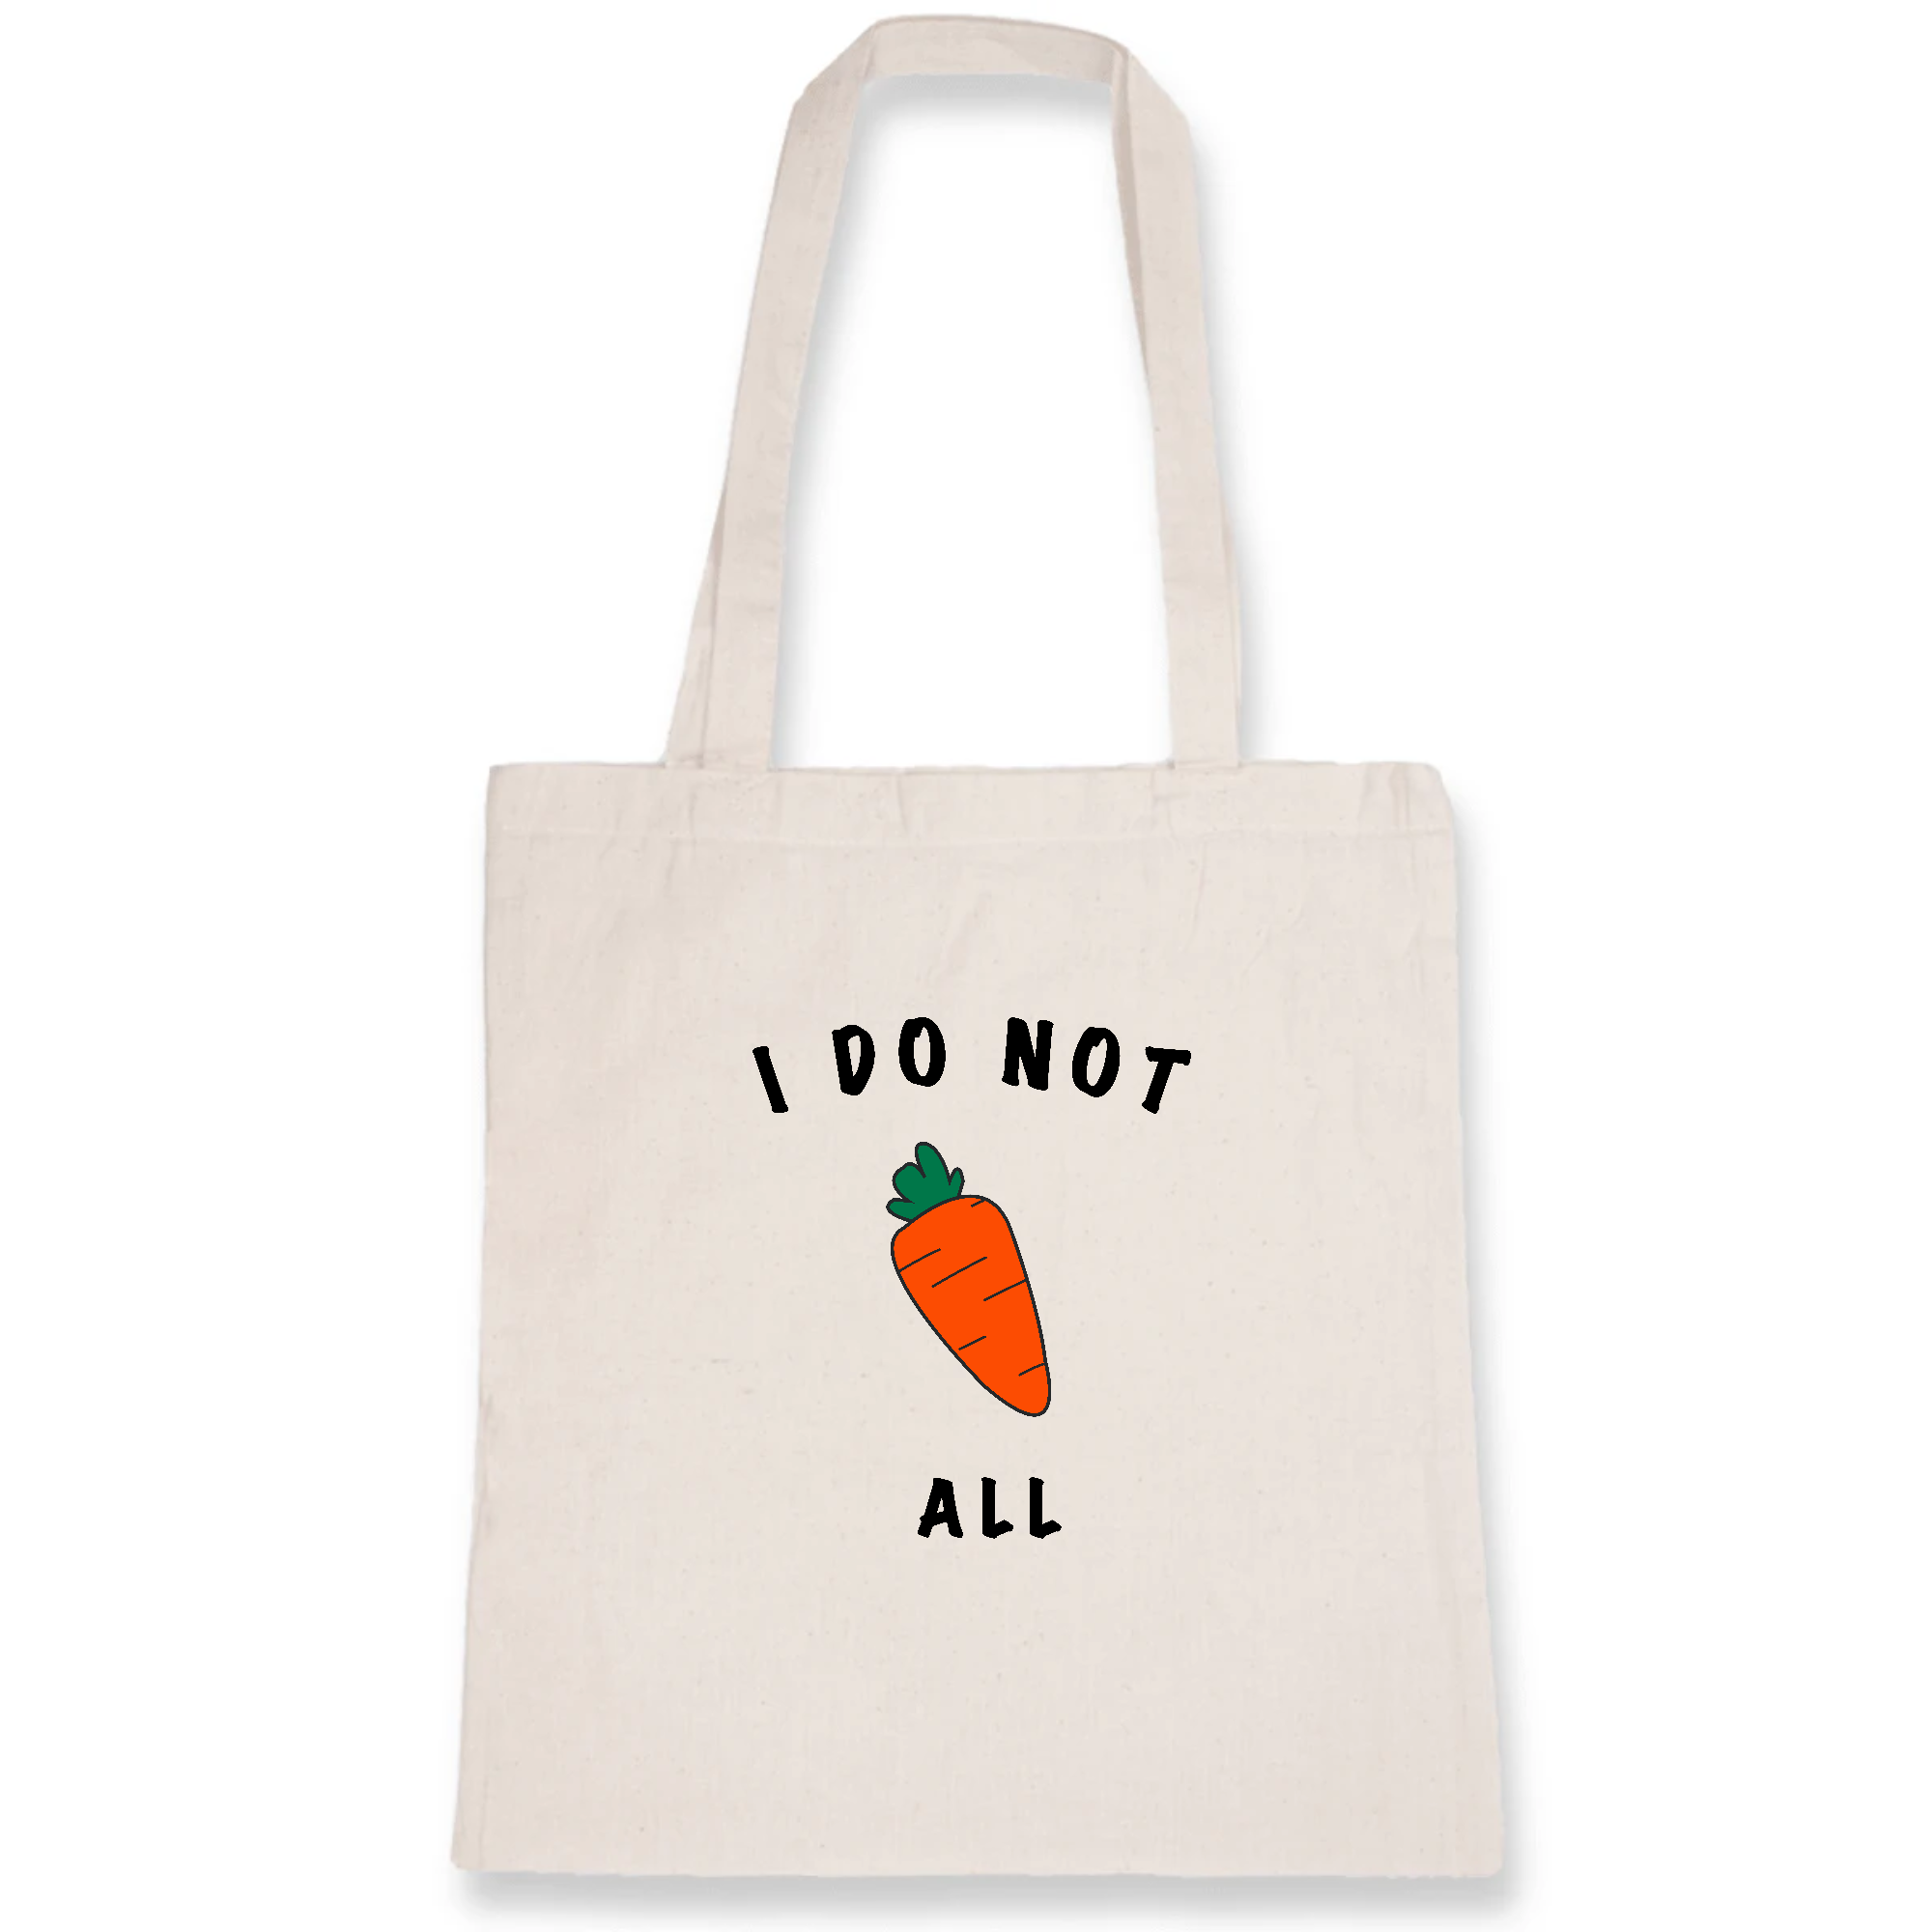 I do not Carrot all - Organic Cotton Tote Bag - Oat Milk Club